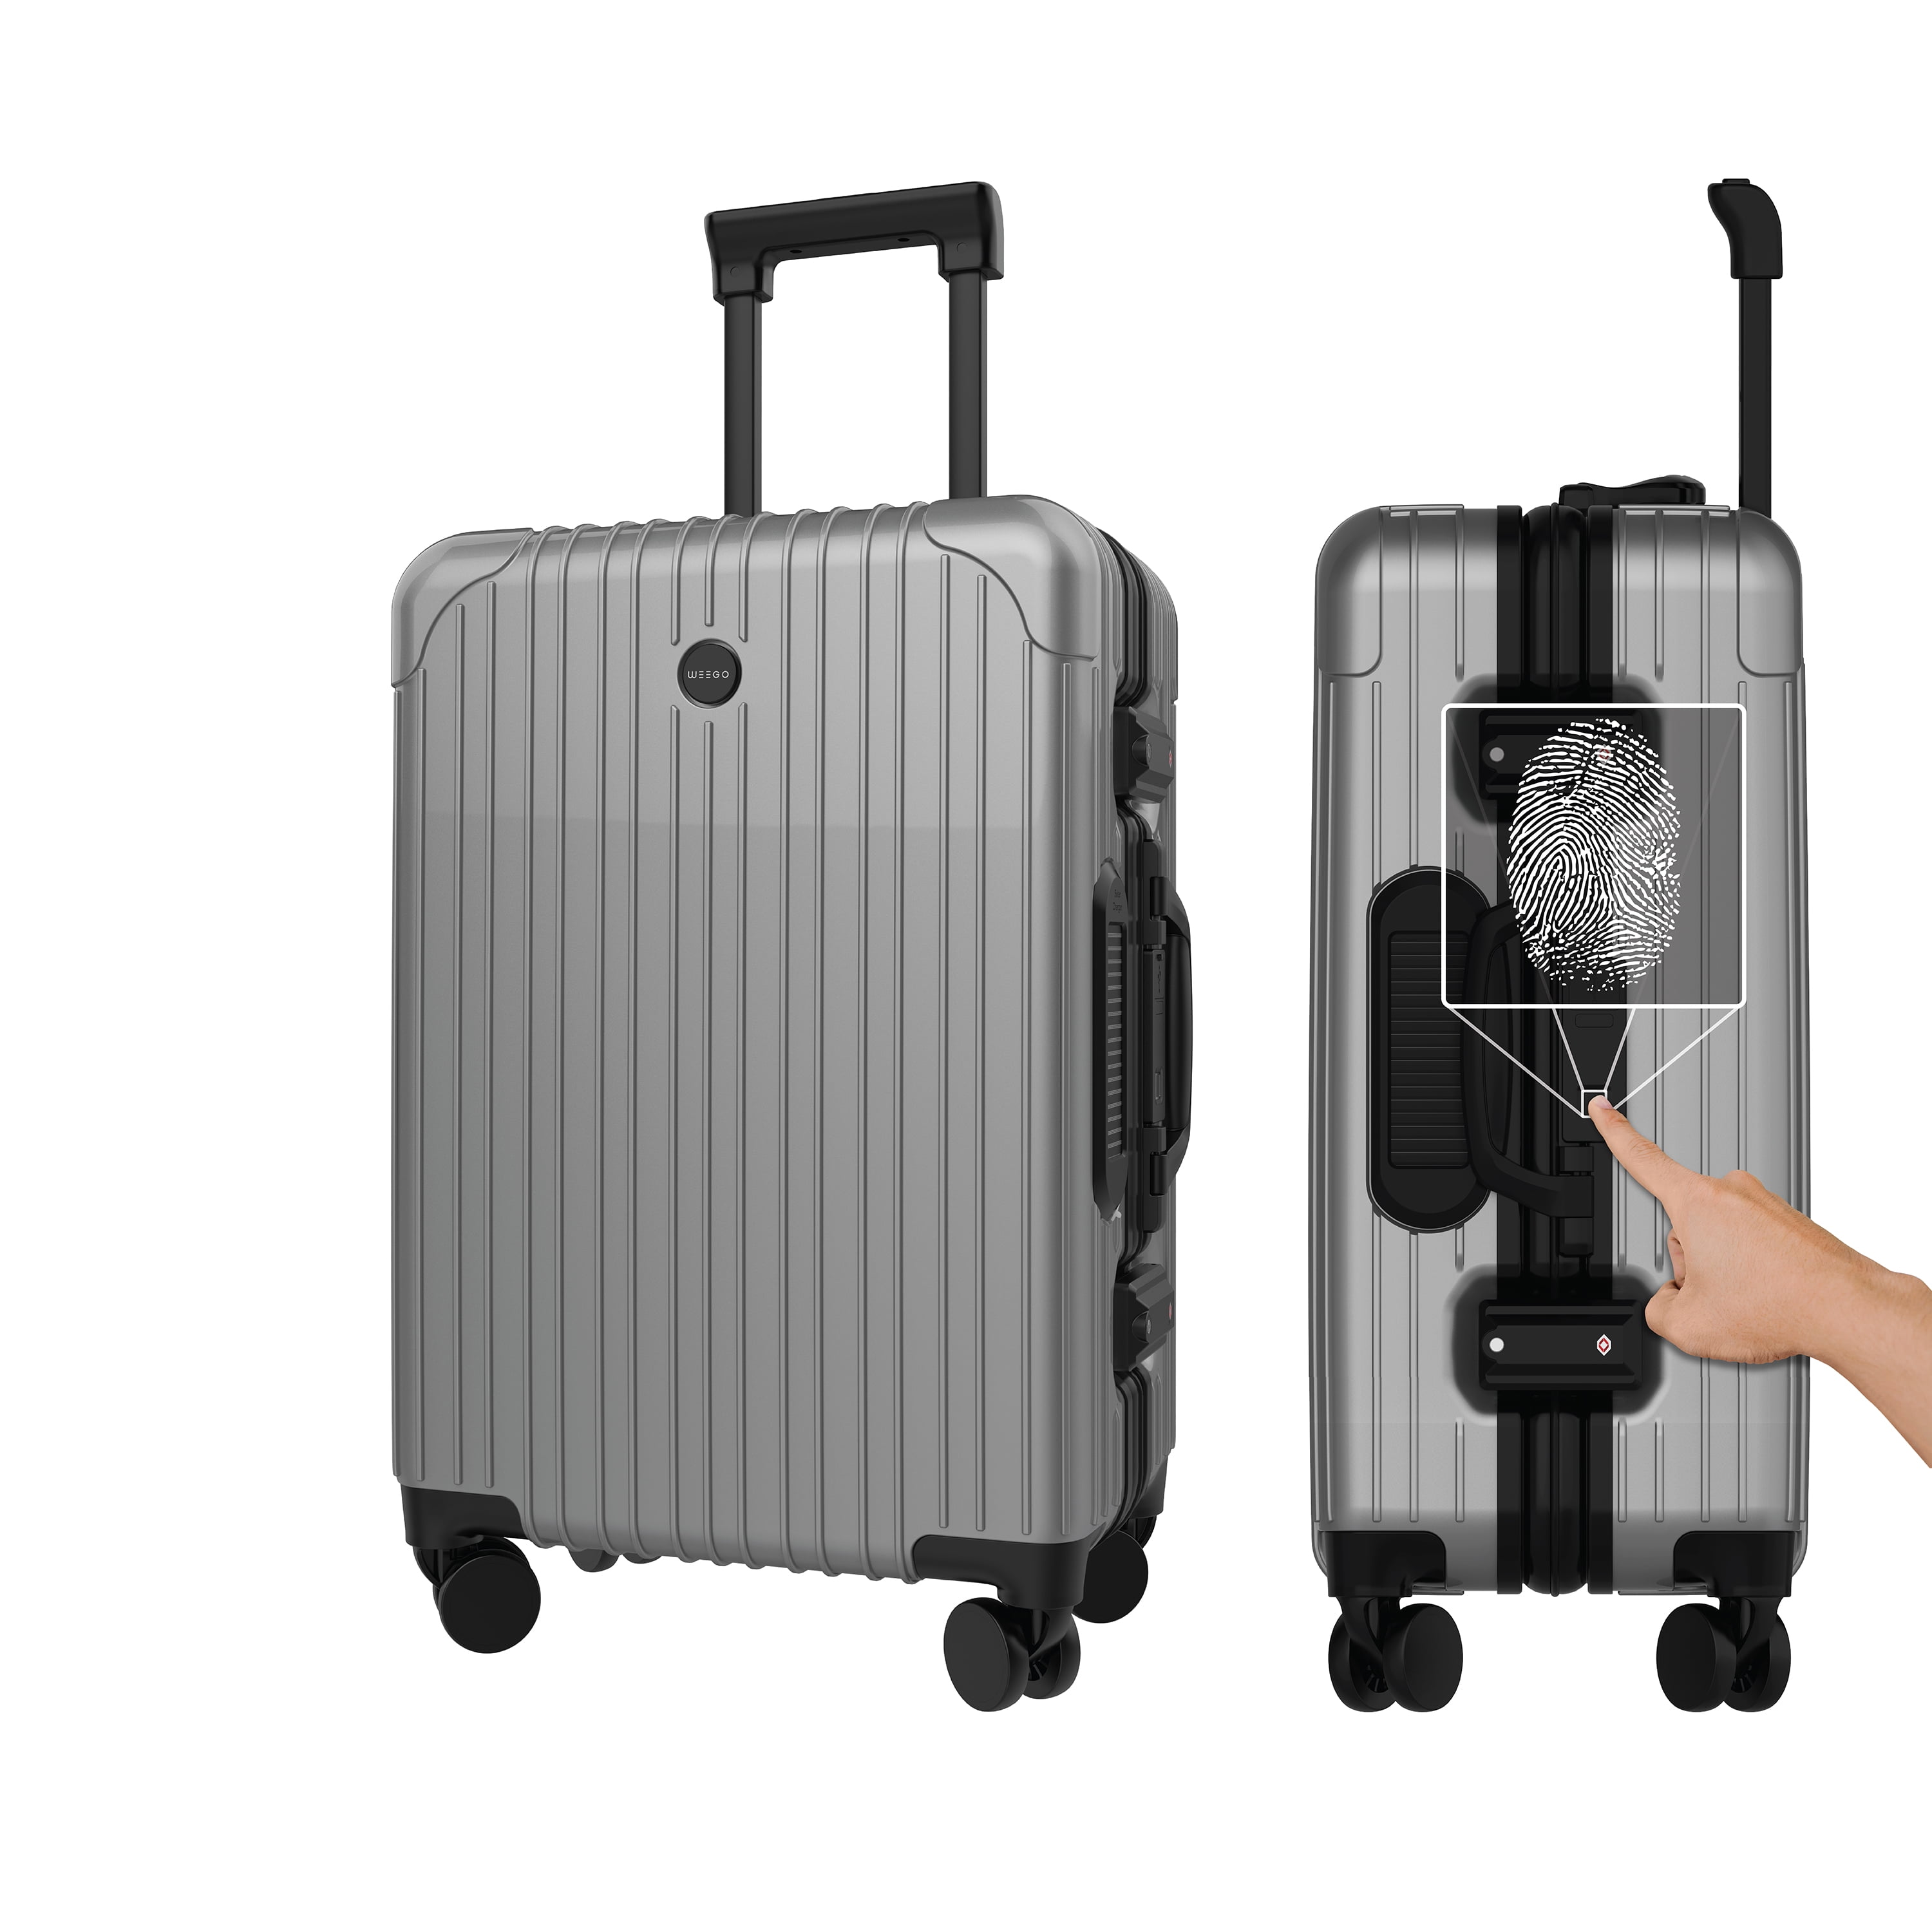 New travel trolley bag with Wheels luggage bag maletas de viaje